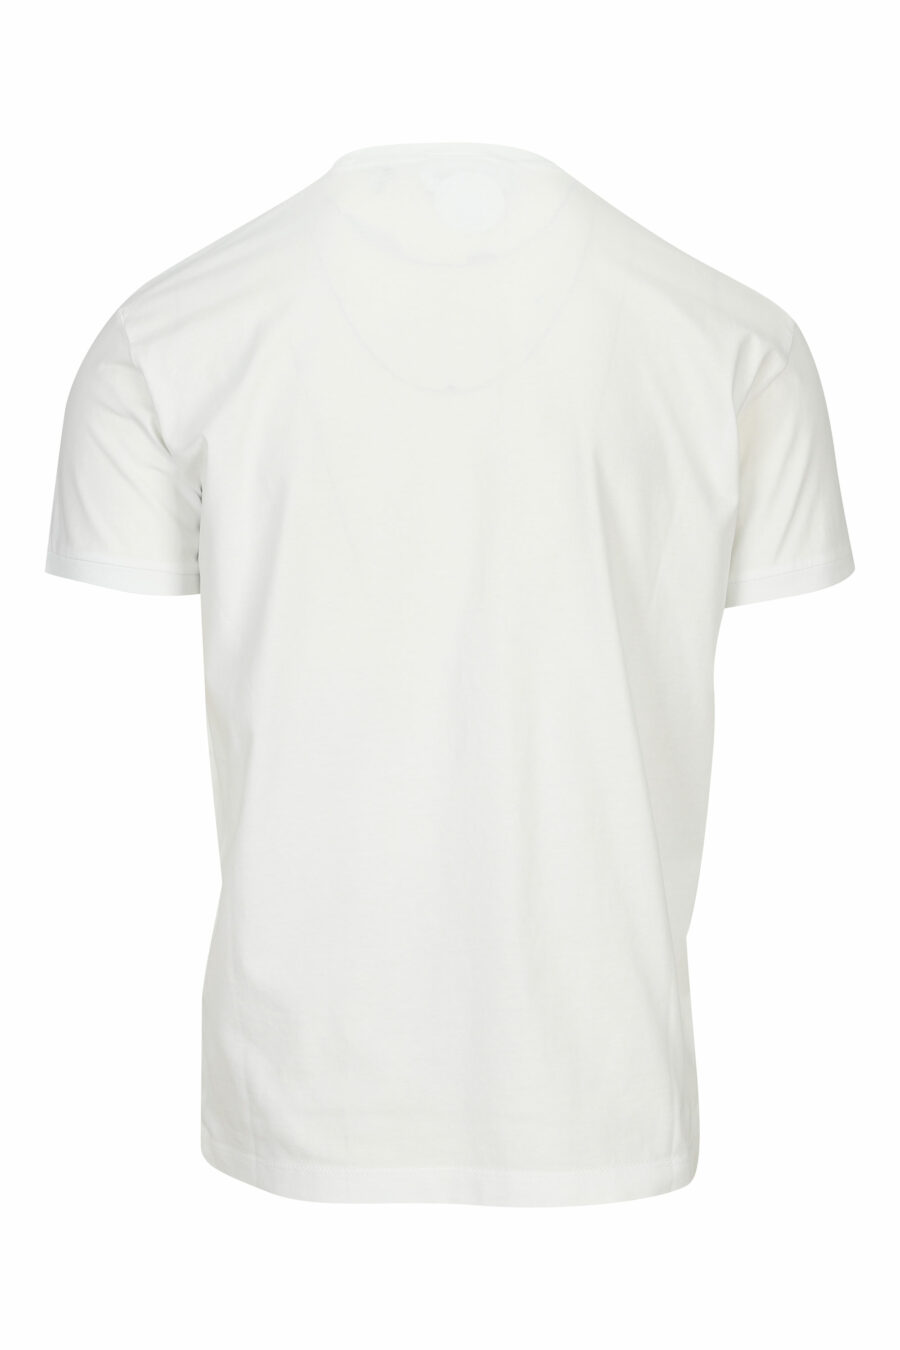 Weißes T-Shirt mit schwarzem Graffiti-Maxilogo - 8054148572037 1